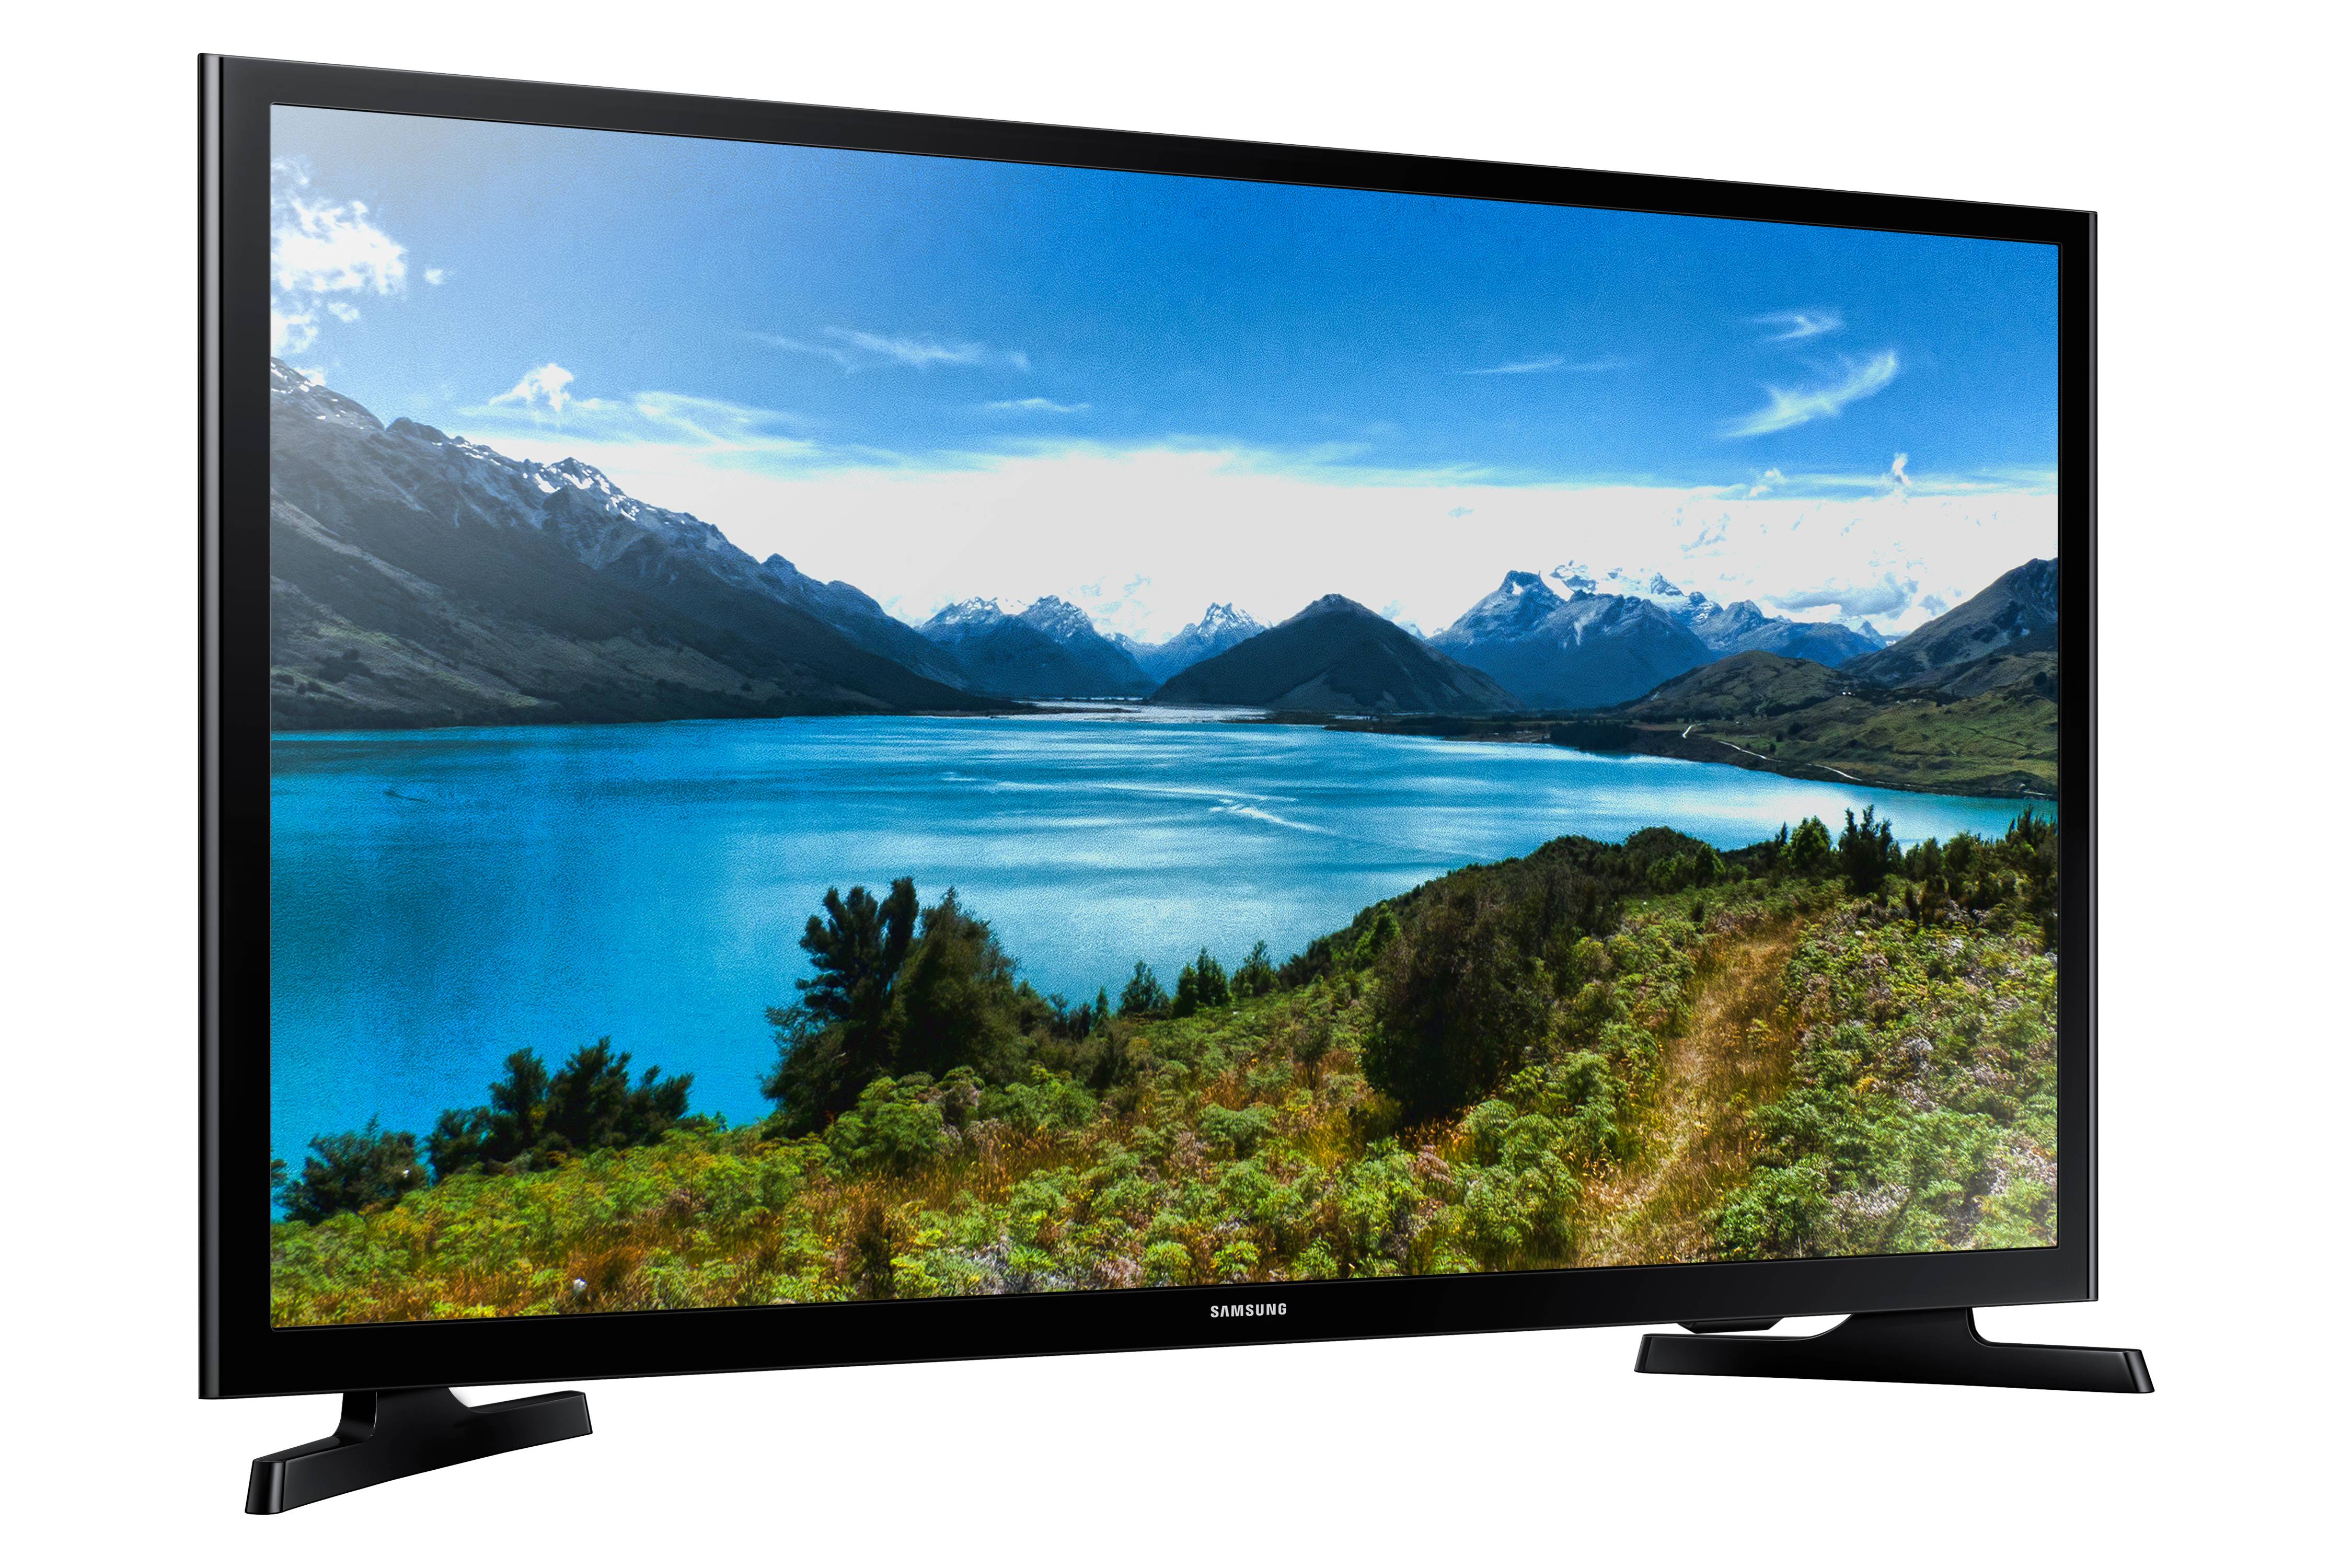 Restored SAMSUNG 32" Class HD (720P) LED TV (UN32J4002) (Refurbished) - image 7 of 7